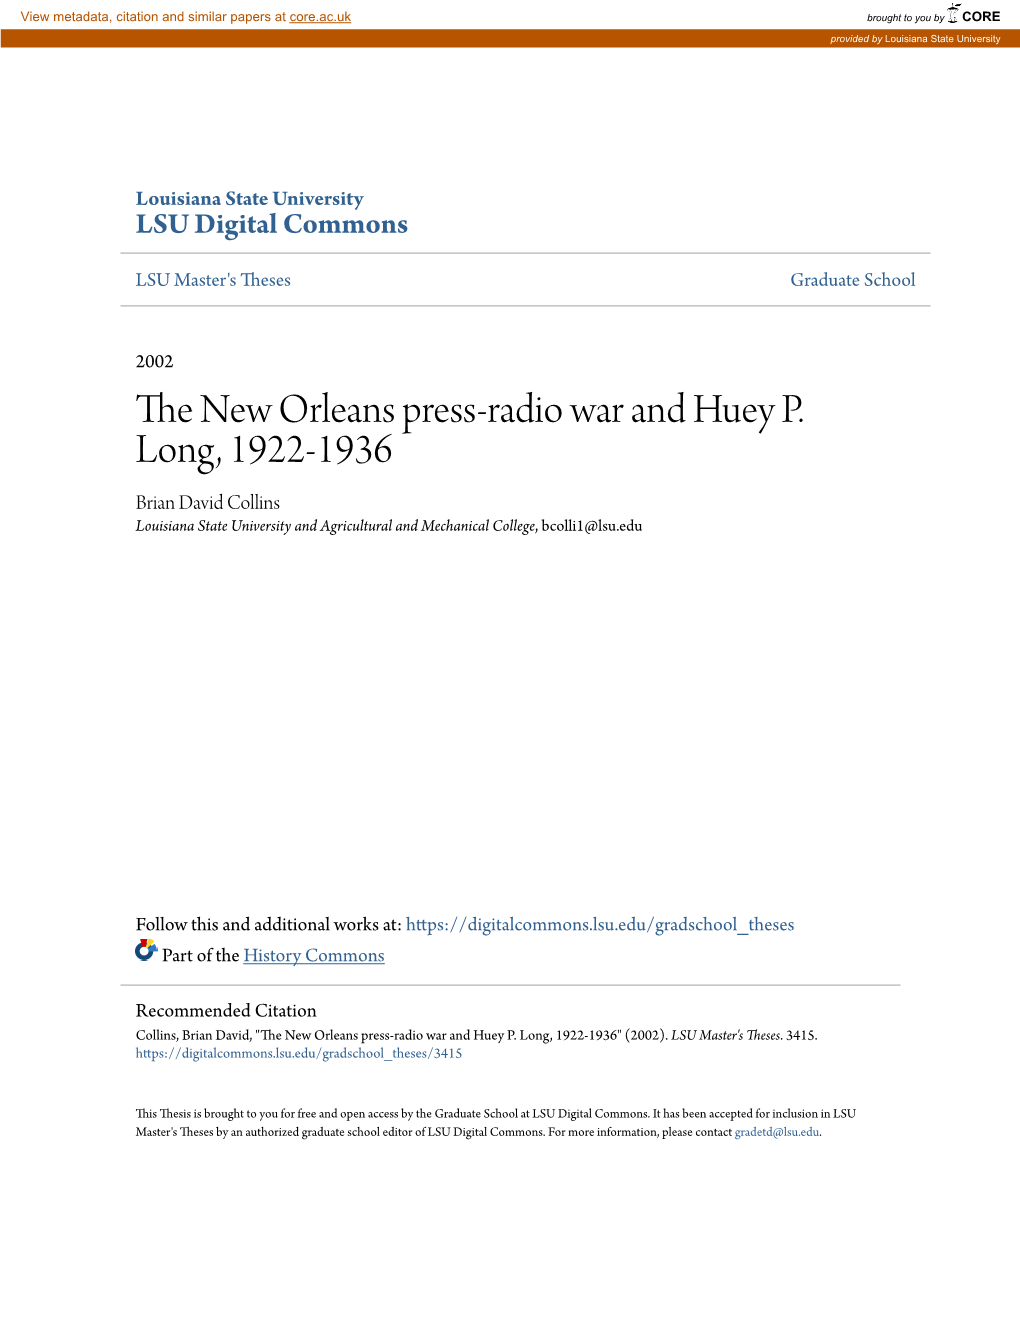 The New Orleans Press-Radio War and Huey P. Long, 1922-1936